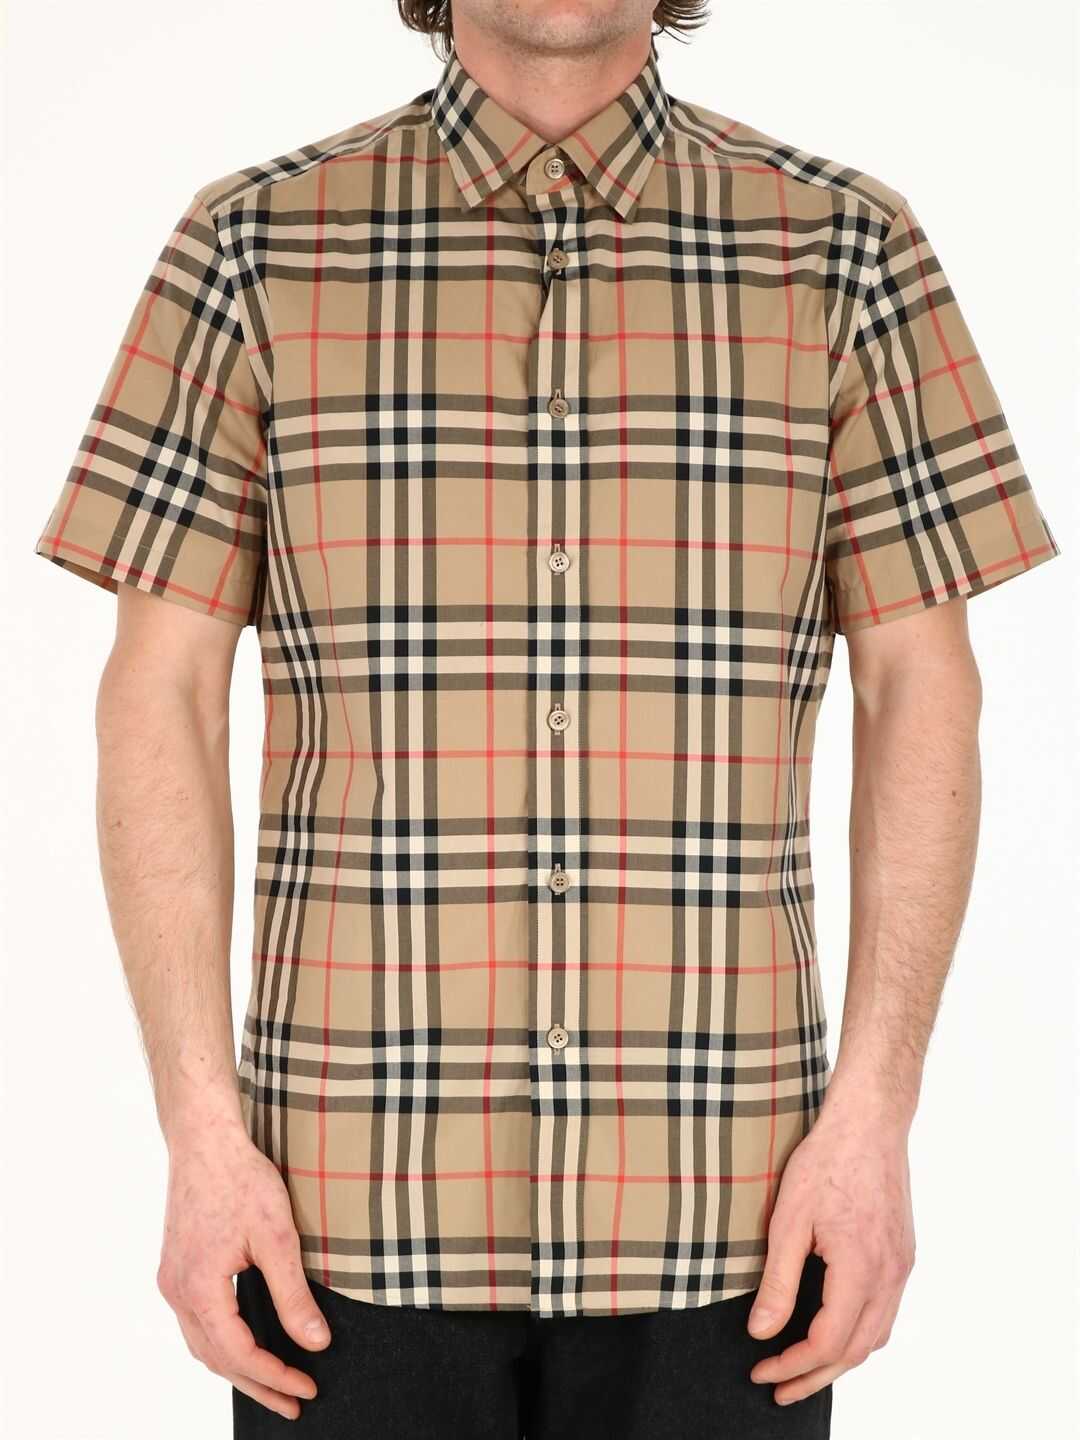 Burberry Vintage Check Shirt 8020869 116073 Beige